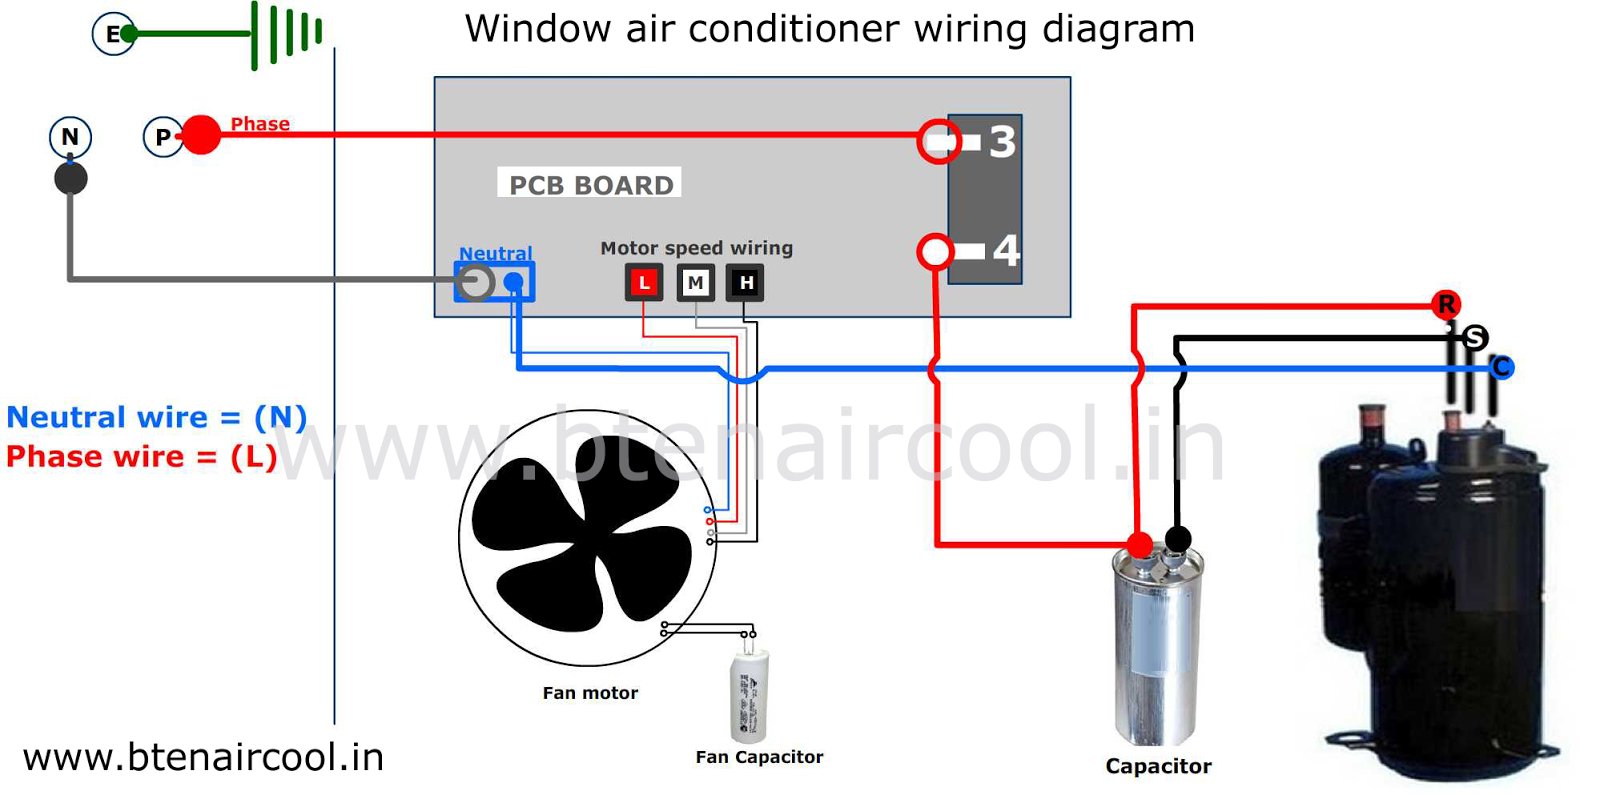 Window Ac Wiring Diagram Window Ac Schematic Wiring Diagram Wiring Diagram Review